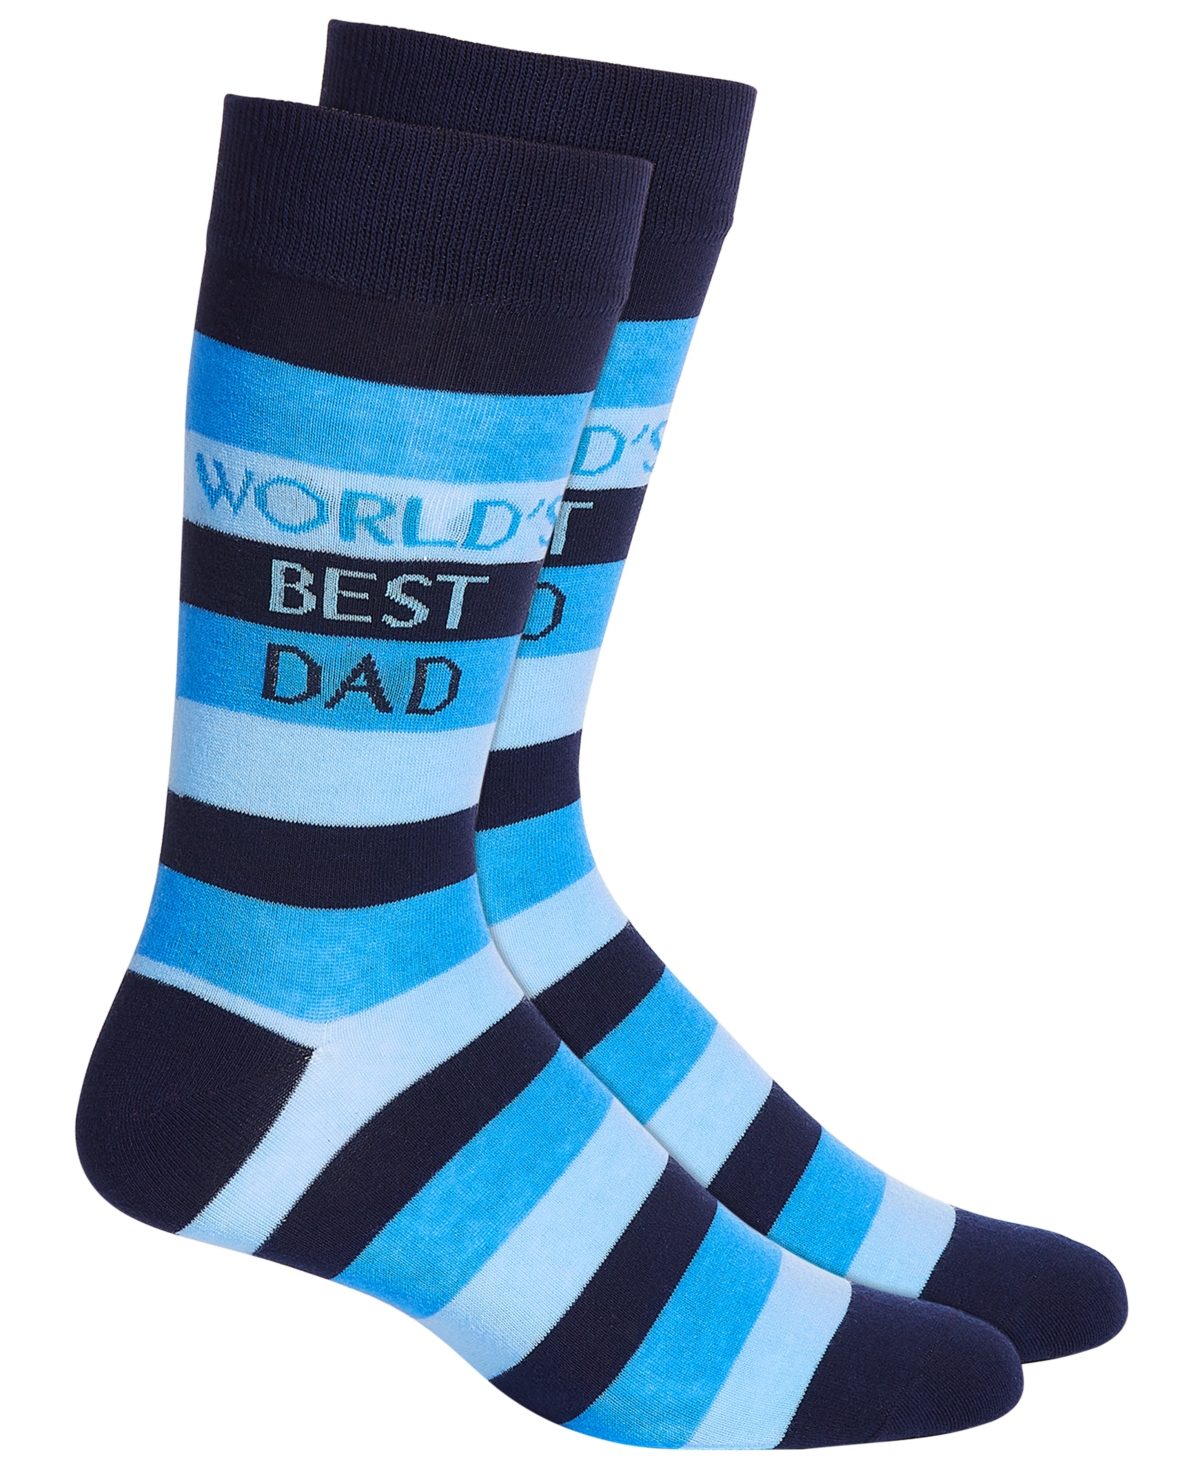 Men's 'World's Best Dad' Crew Socks, Created for Macy's - Blue